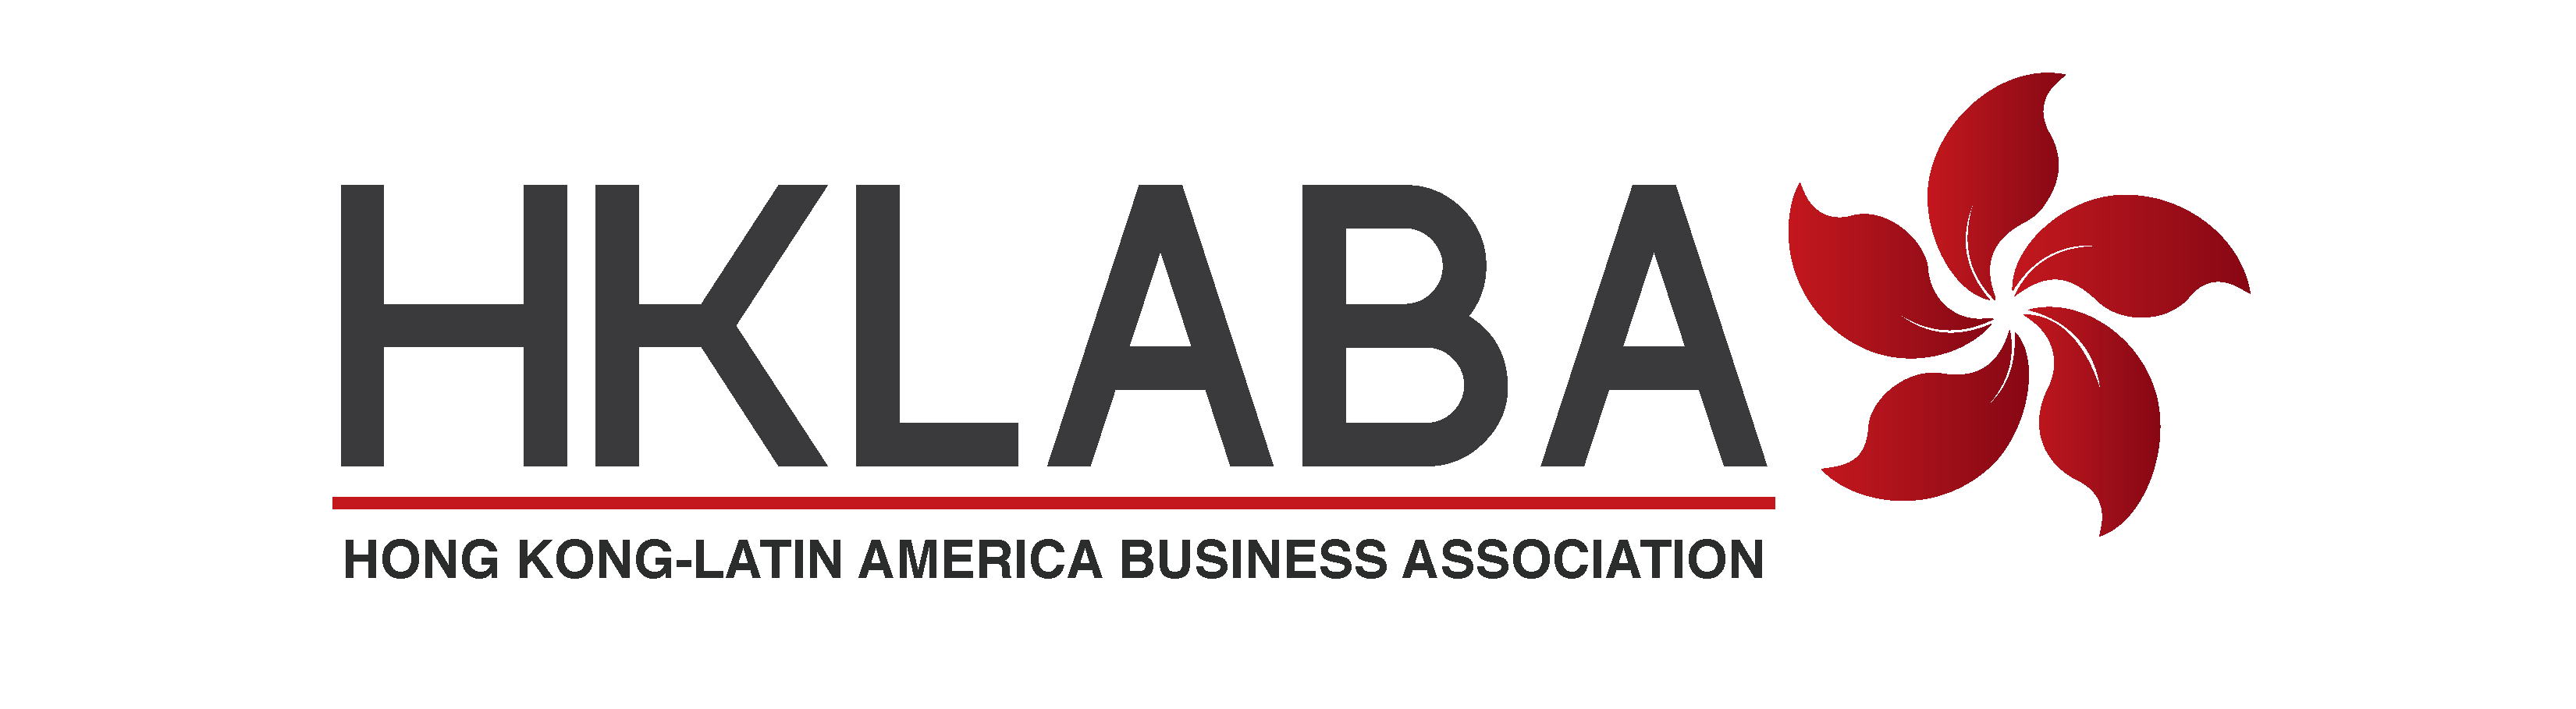 Hong Kong – Latin America Business Association (HKLABA)